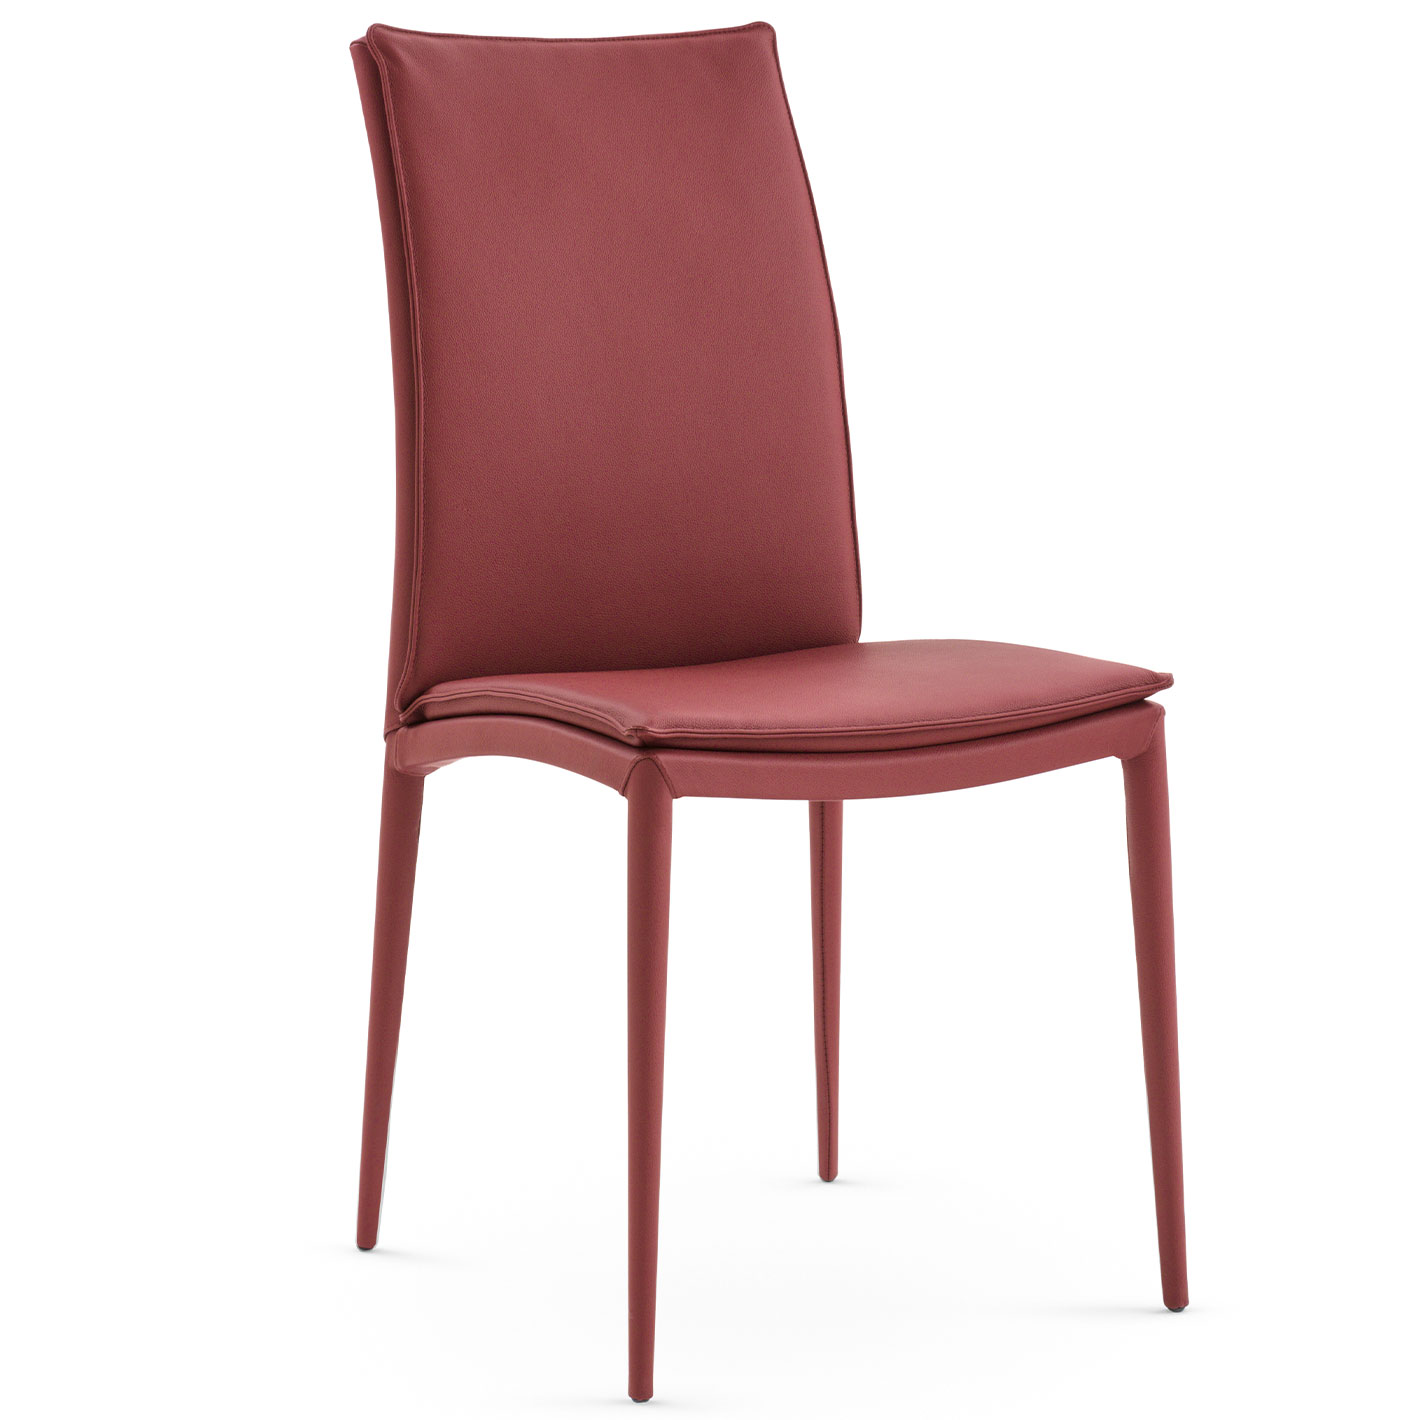 Stühle unter 500 Euro - ASIA SOFT HIGH Stuhl